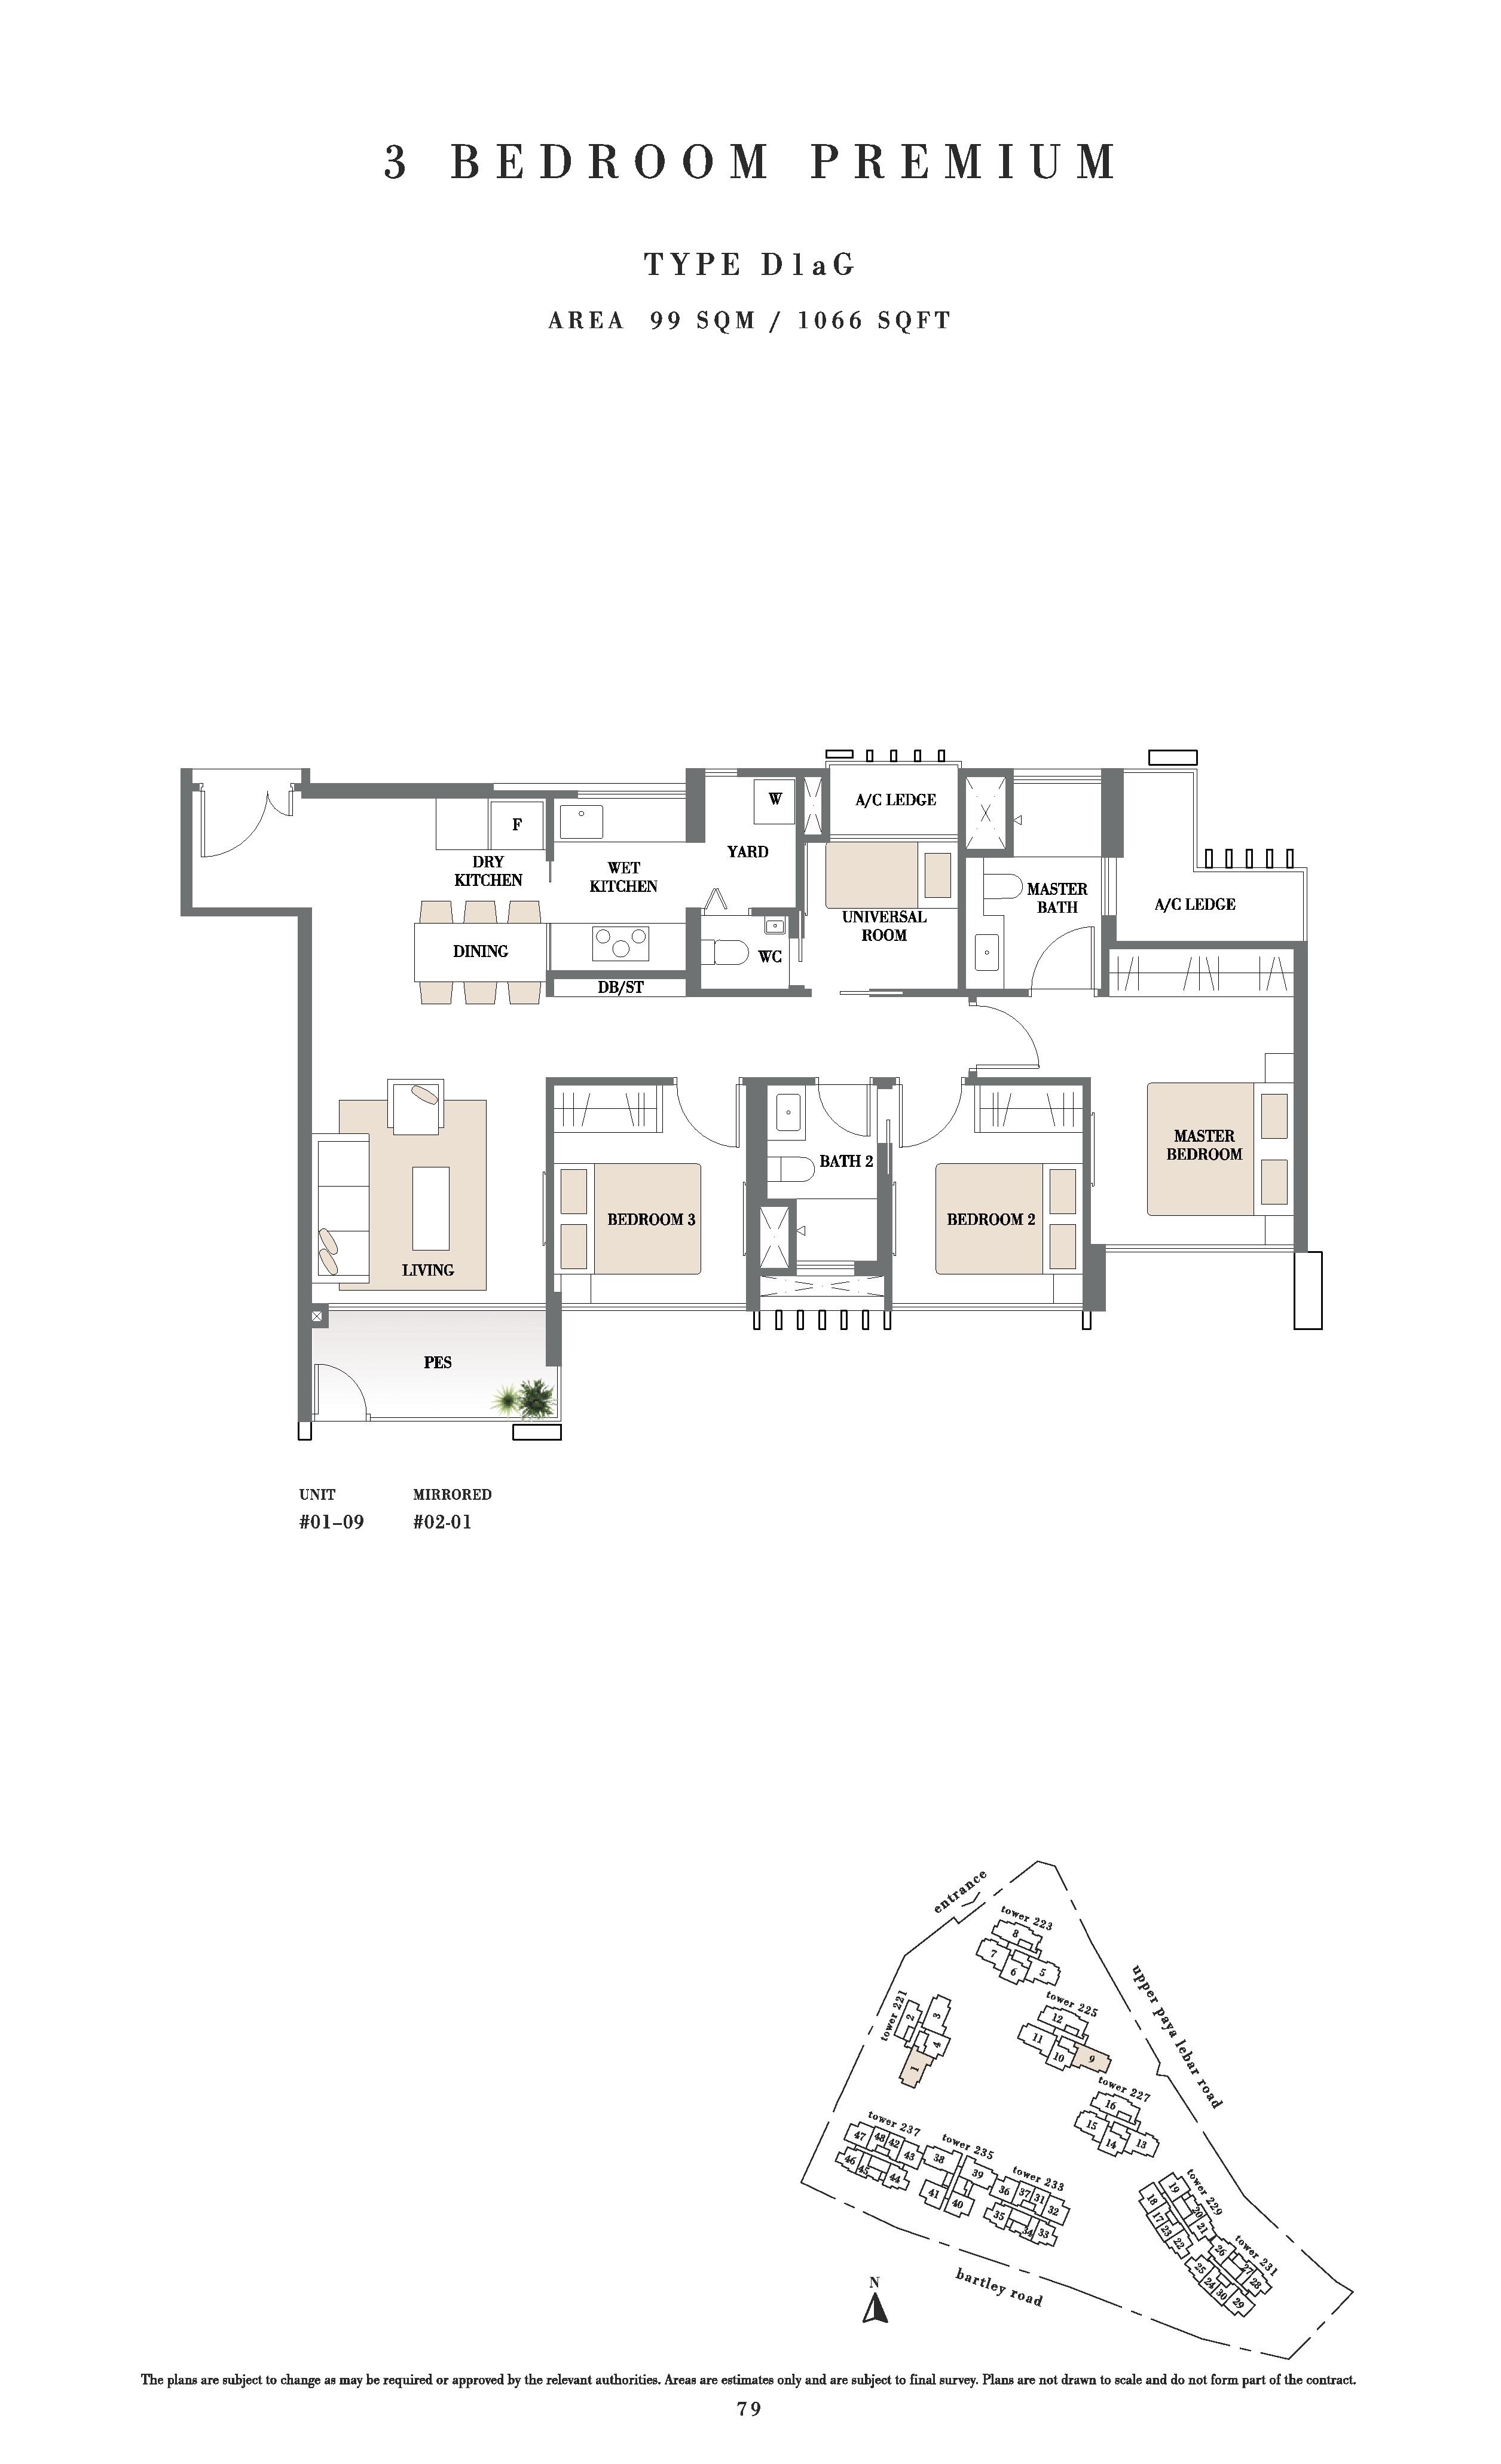 Botanique @ Bartley 3 Bedroom Premium PES Floor Plans Type D1aG